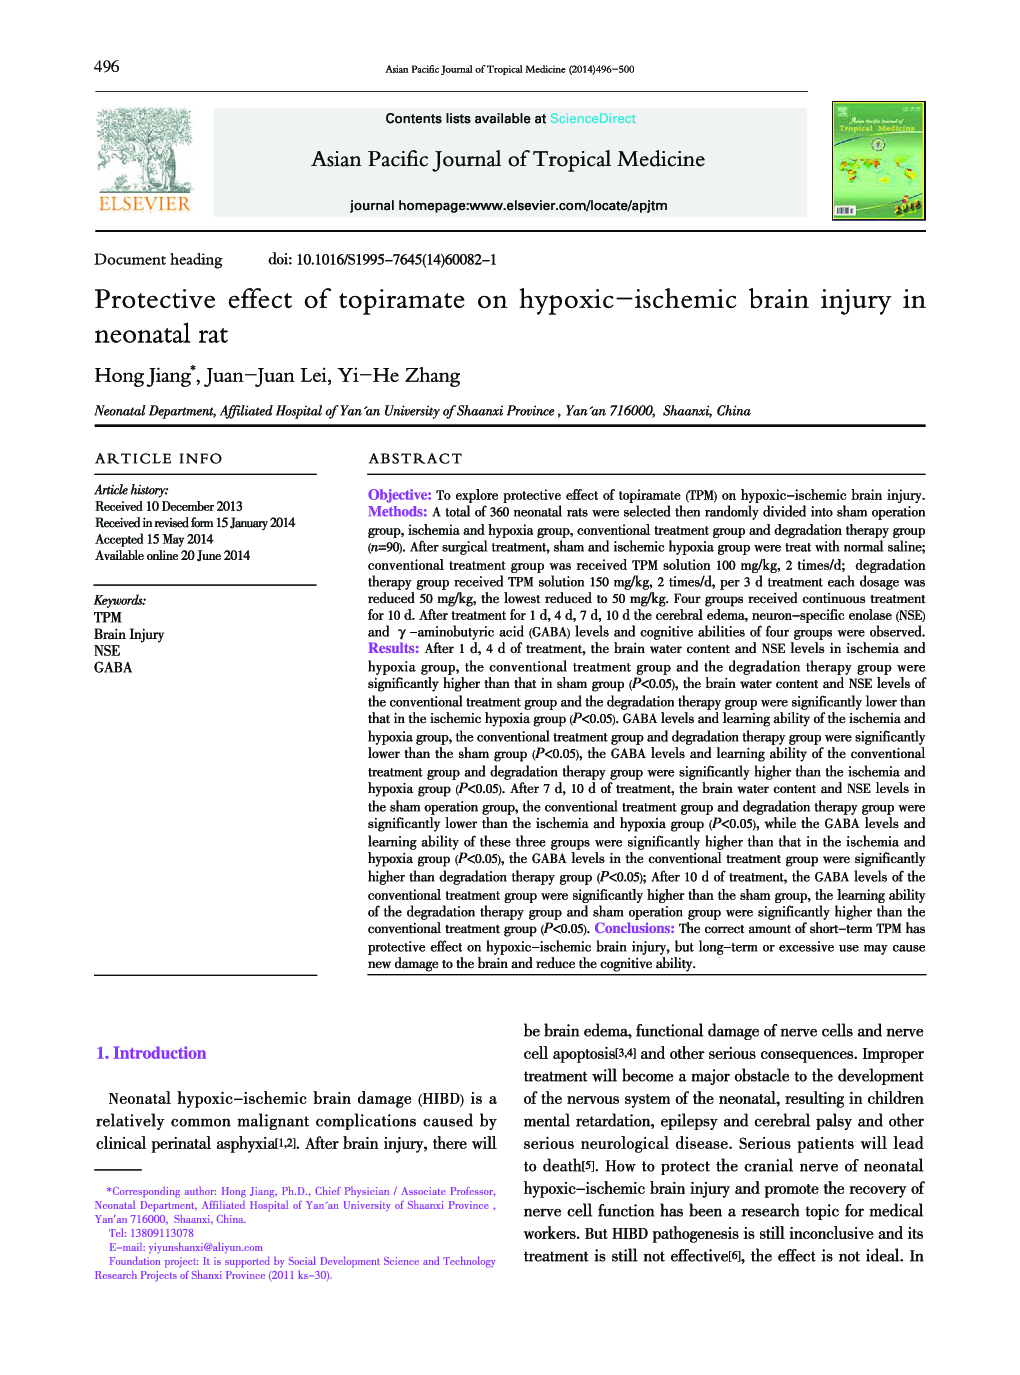 Protective effect of topiramate on hypoxic-ischemic brain injury in neonatal rat 